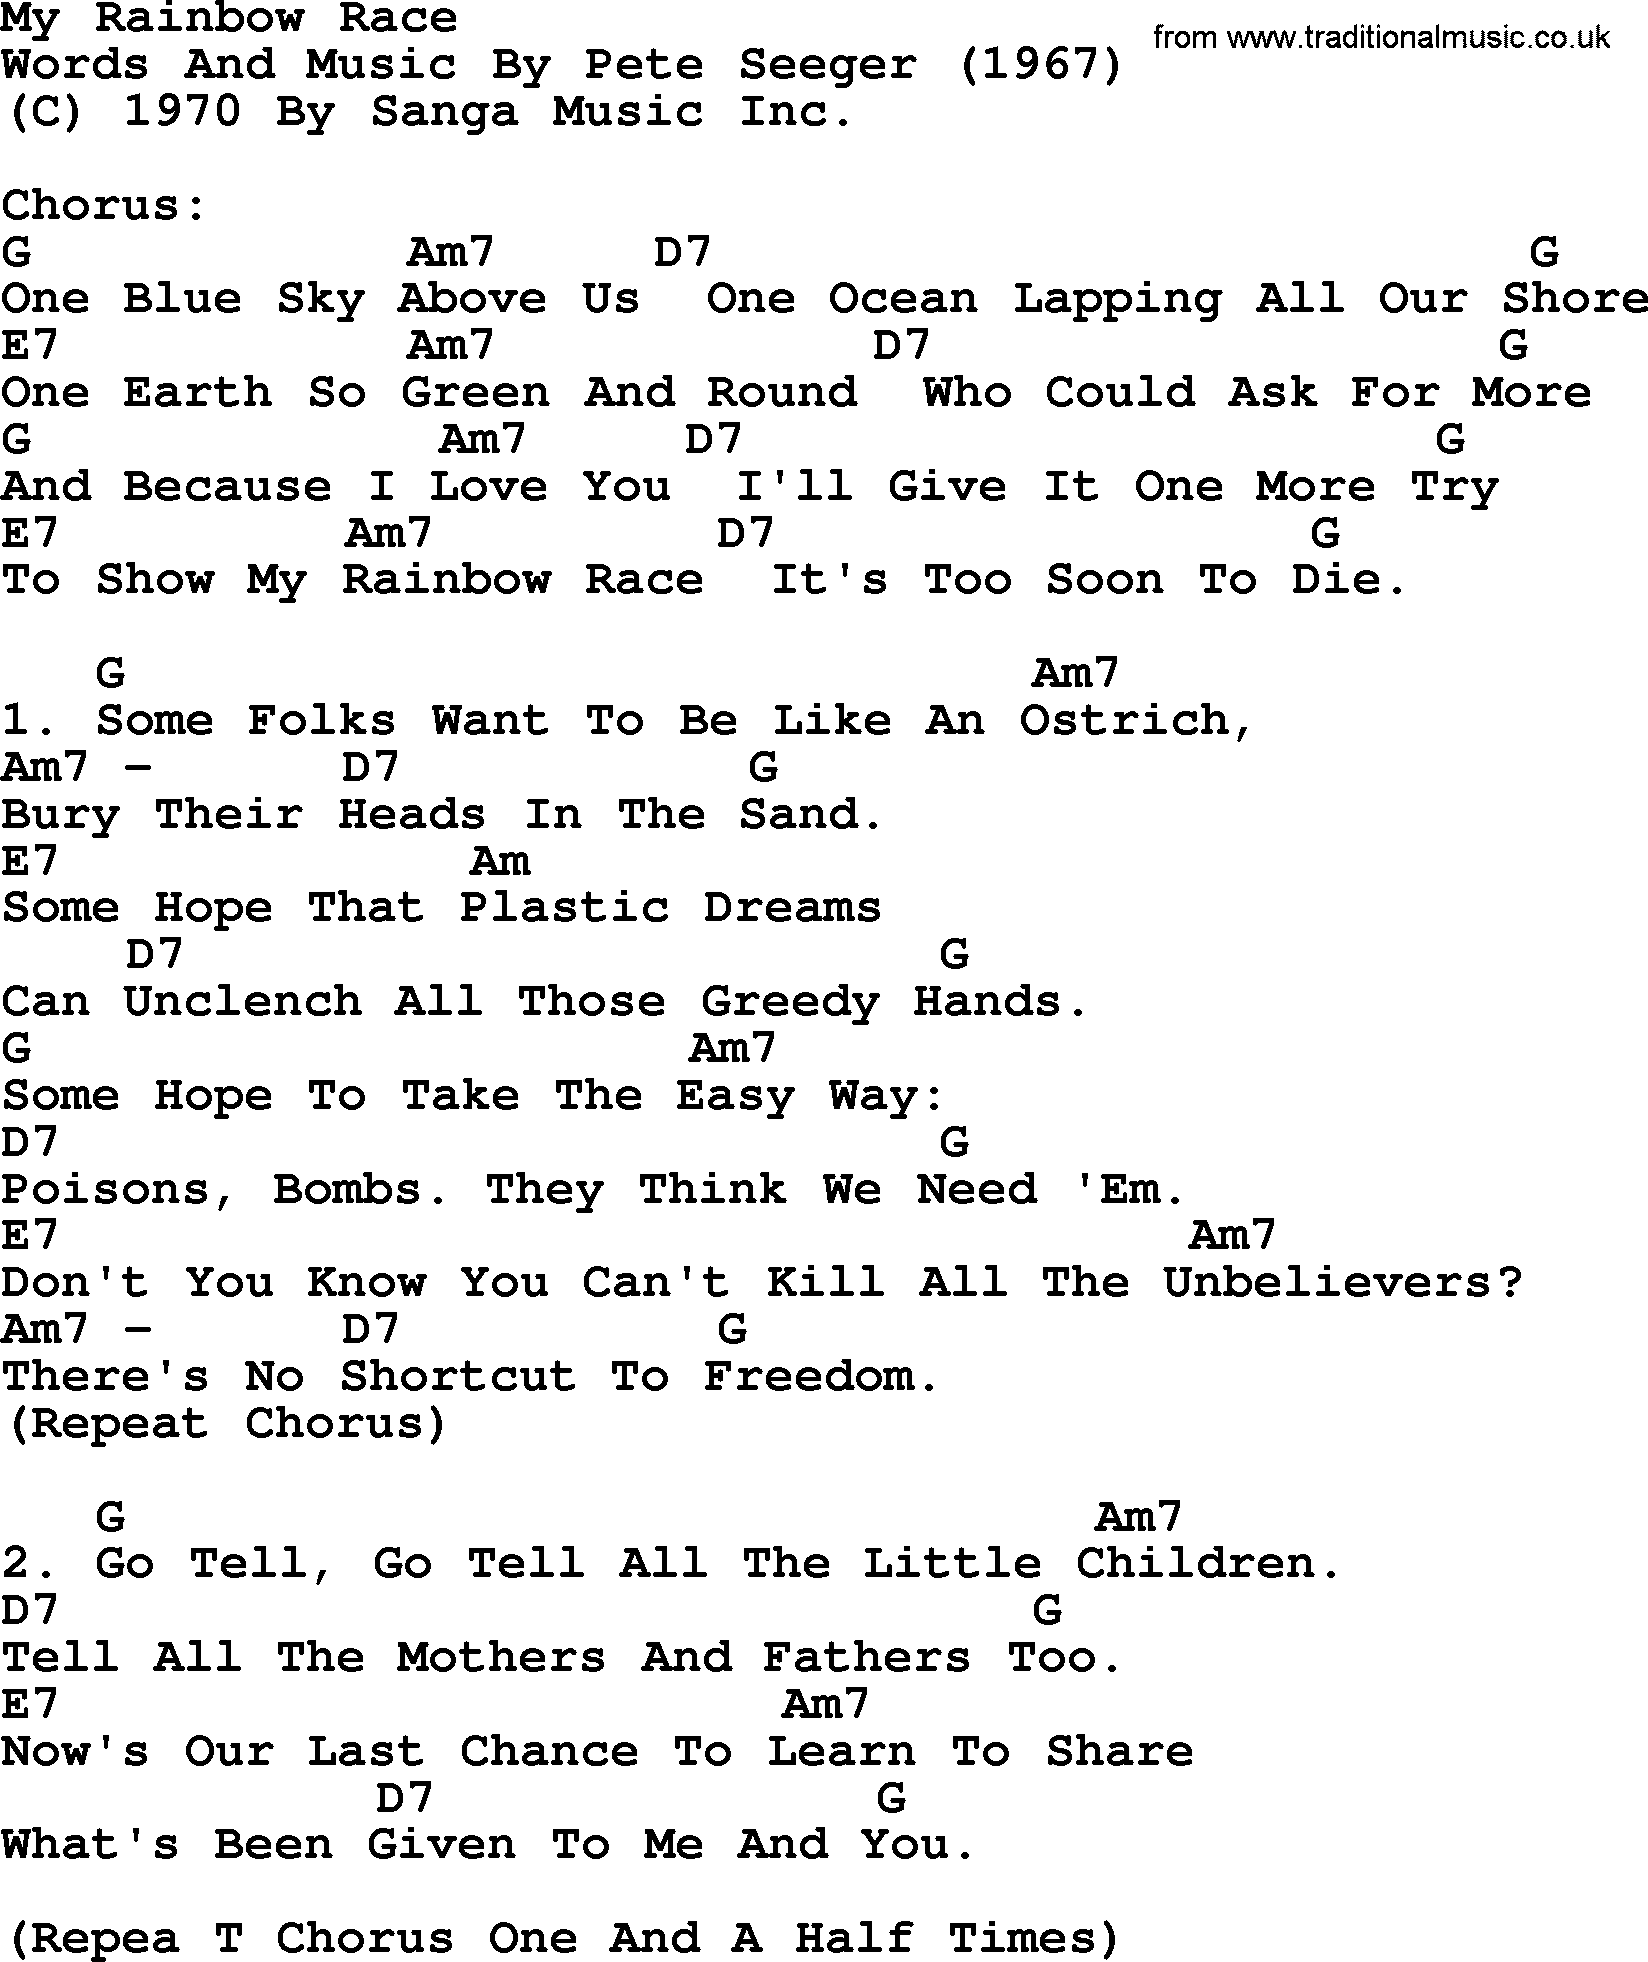 Pete Seeger song My Rainbow Race, lyrics and chords